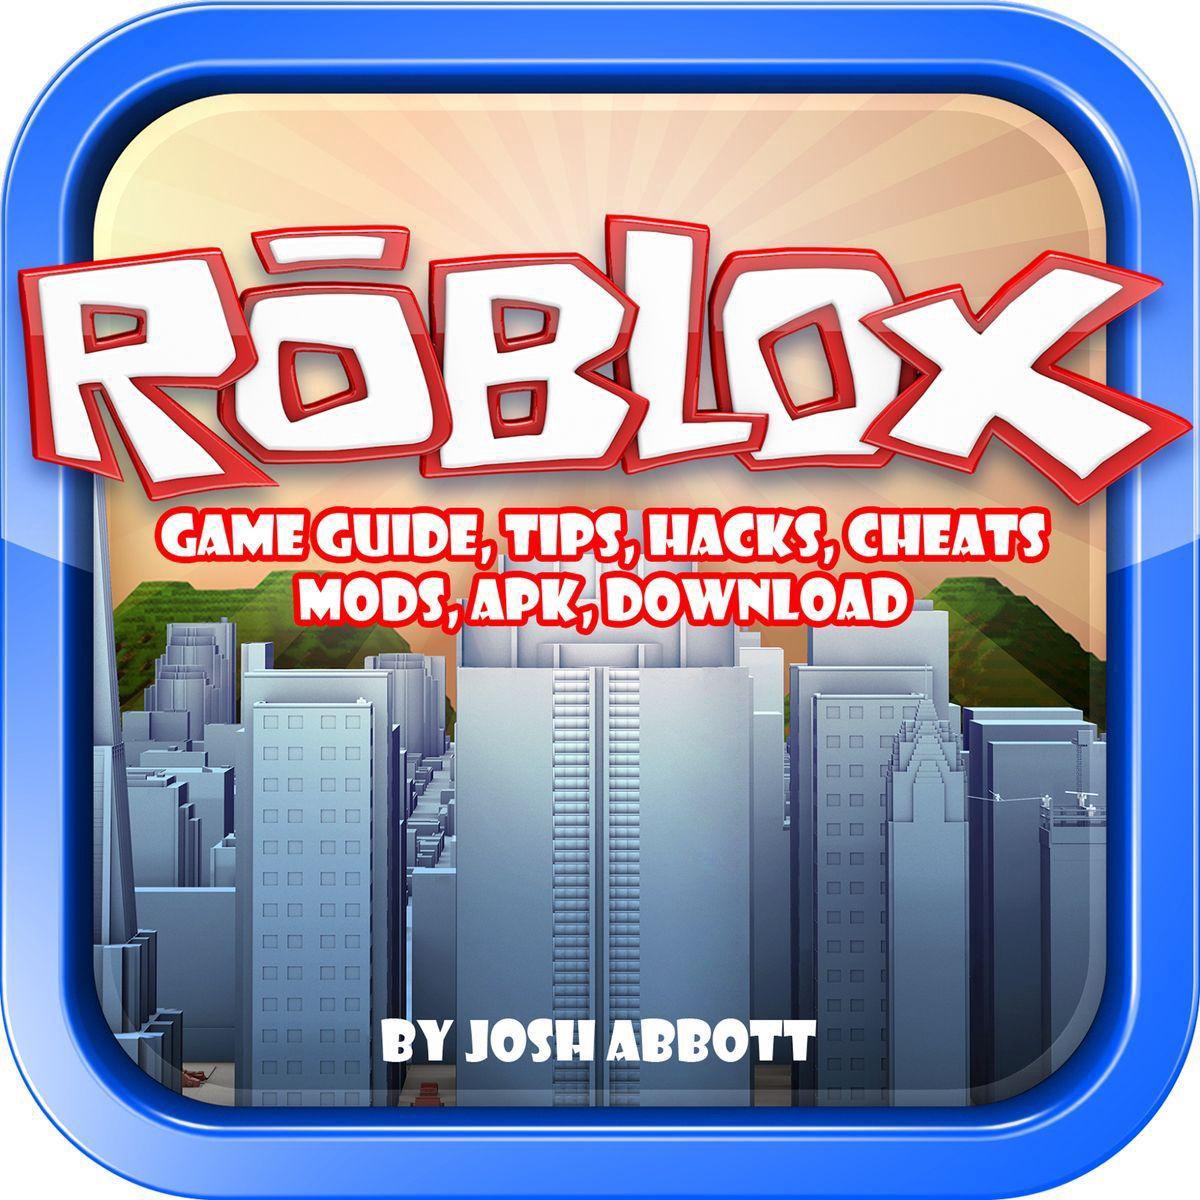 Bol Com Roblox Game Guide Tips Hacks Cheats Mods Apk Download Josh Abbott - roblox ps4 kopen